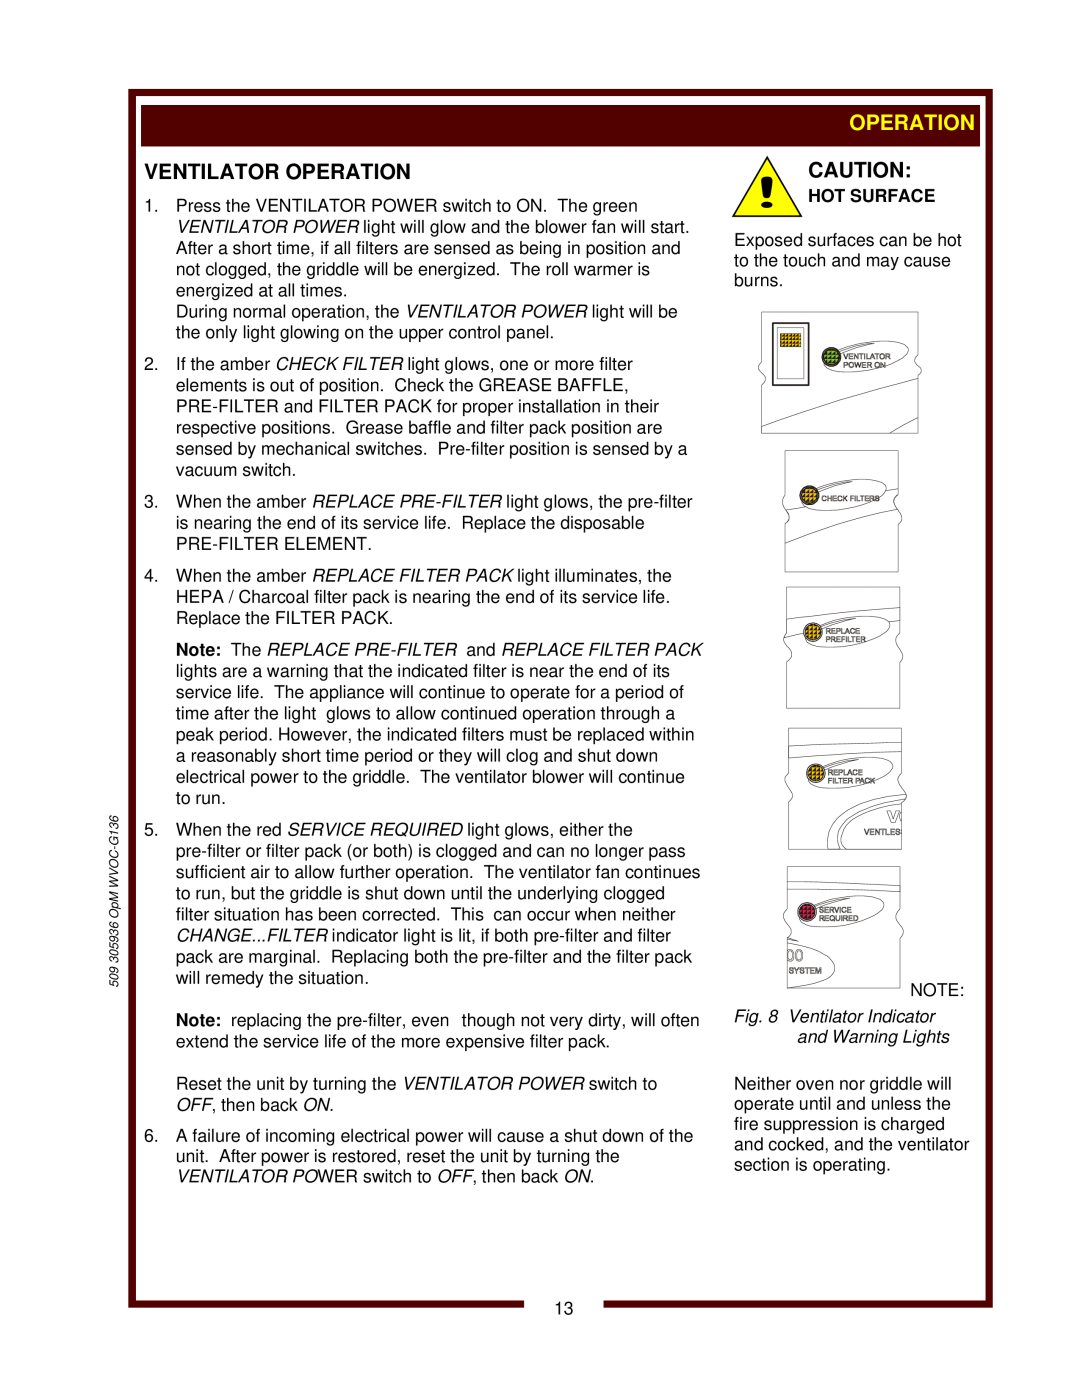 Wells WVOC-G136 operation manual Ventilator Operation, Ventilator Indicator and Warning Lights, Hot Surface 